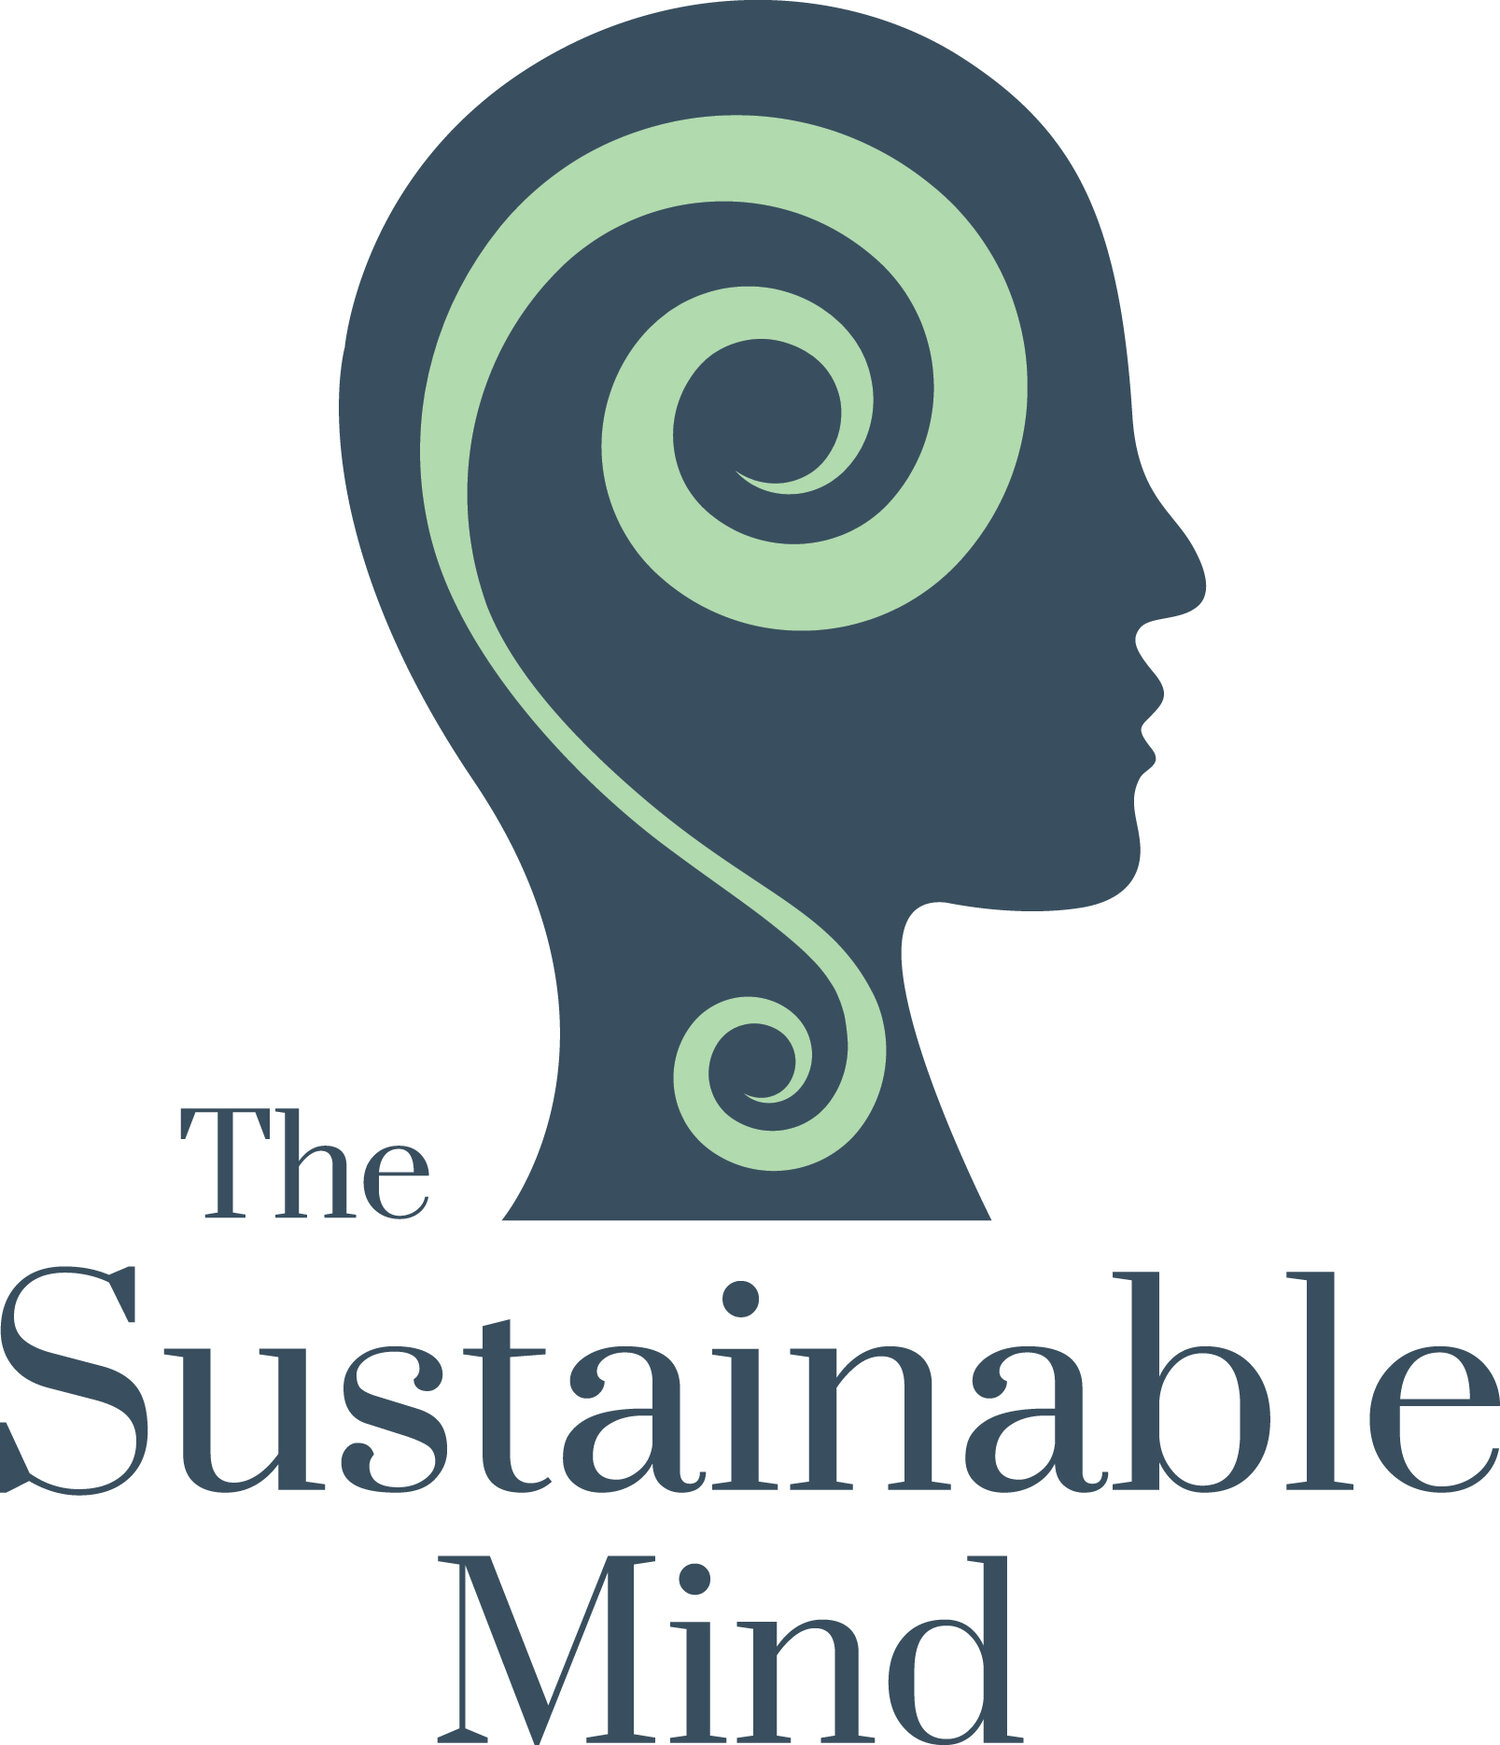 The Sustainable Mind